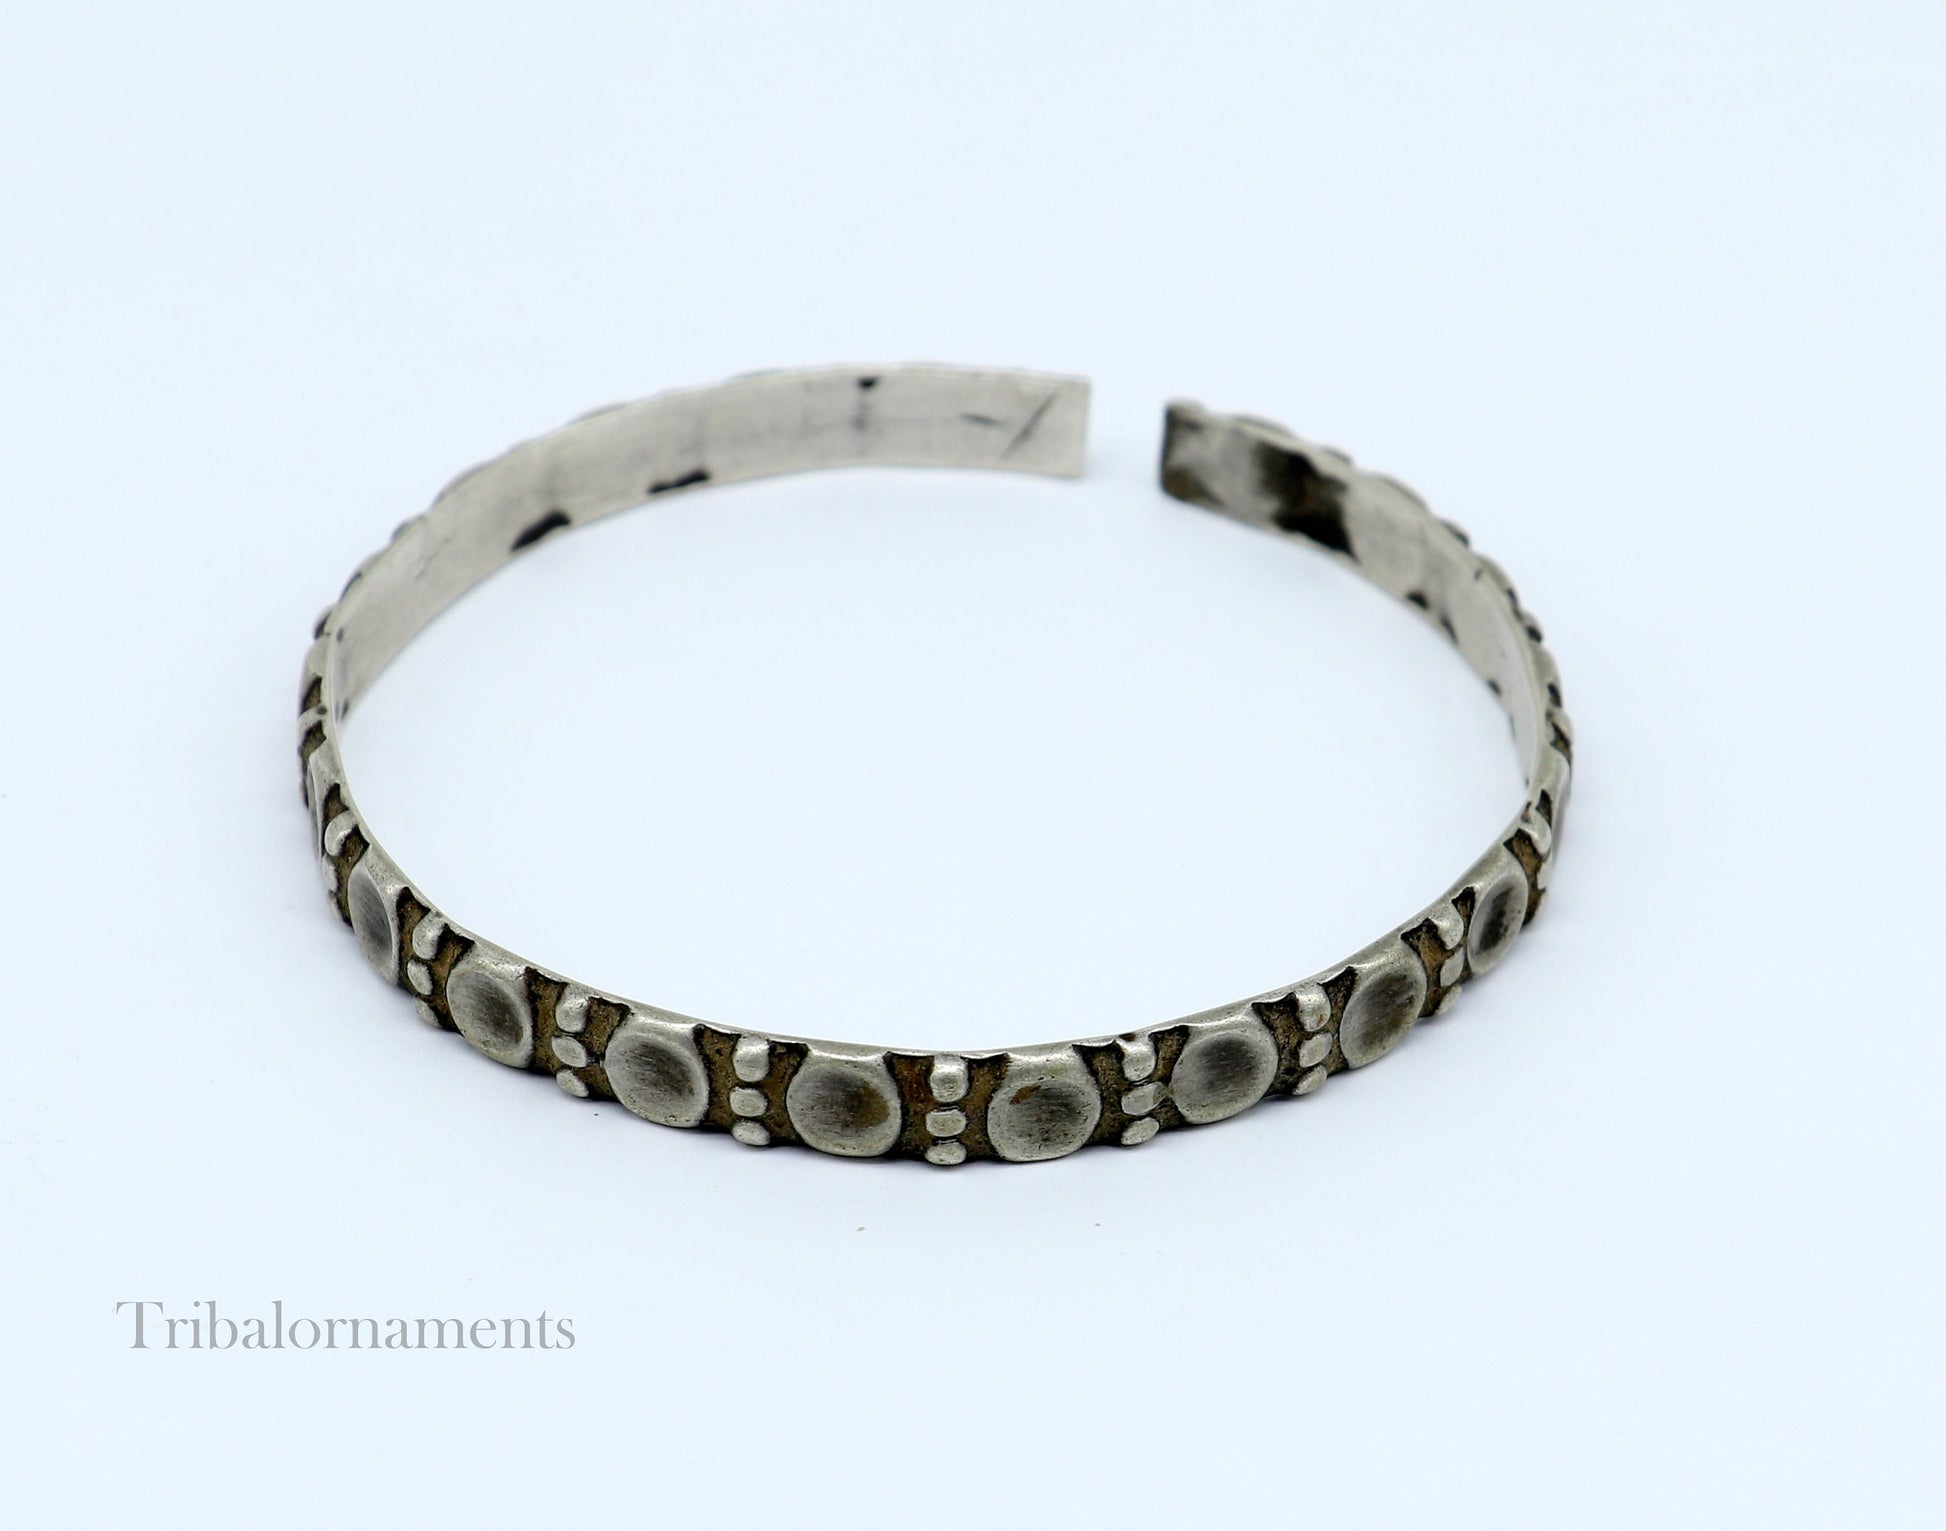 Solid sterling silver vintage old used tribal ethnic handmade adjustable cuff bangle bracelet kada customized jewelry sba26 - TRIBAL ORNAMENTS